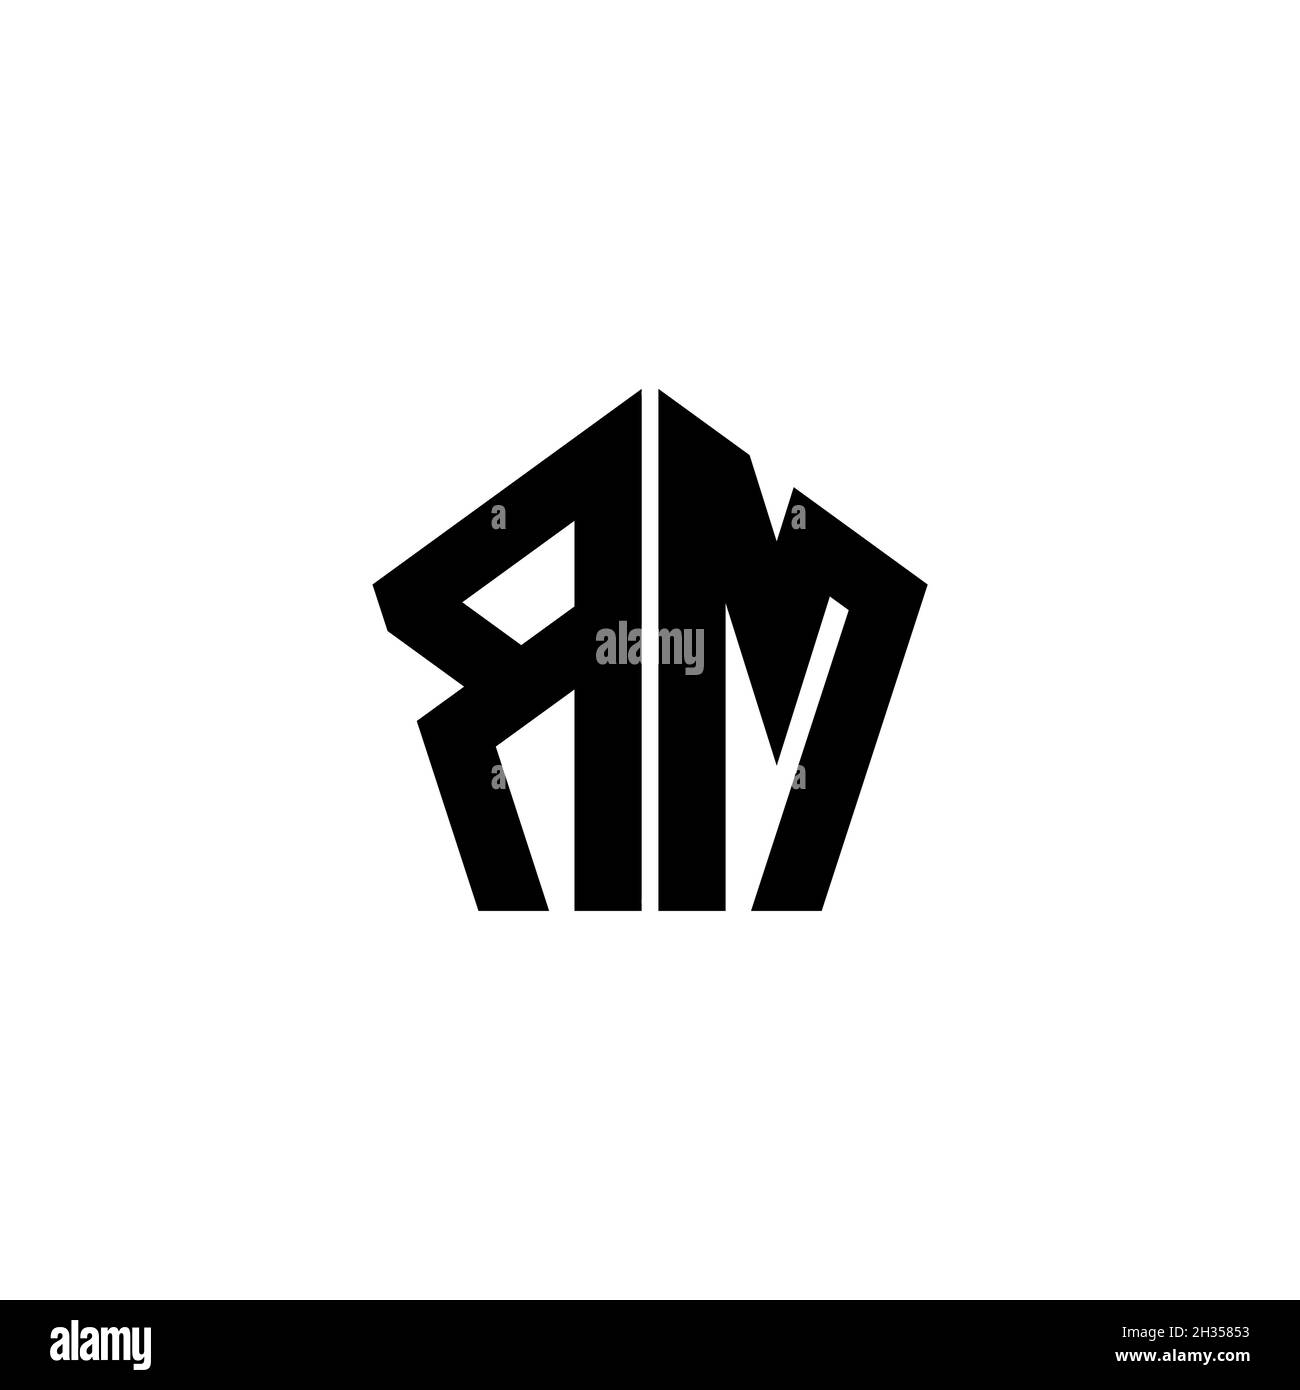 RM Monogram logo letter with polygonal geometric shape style design ...